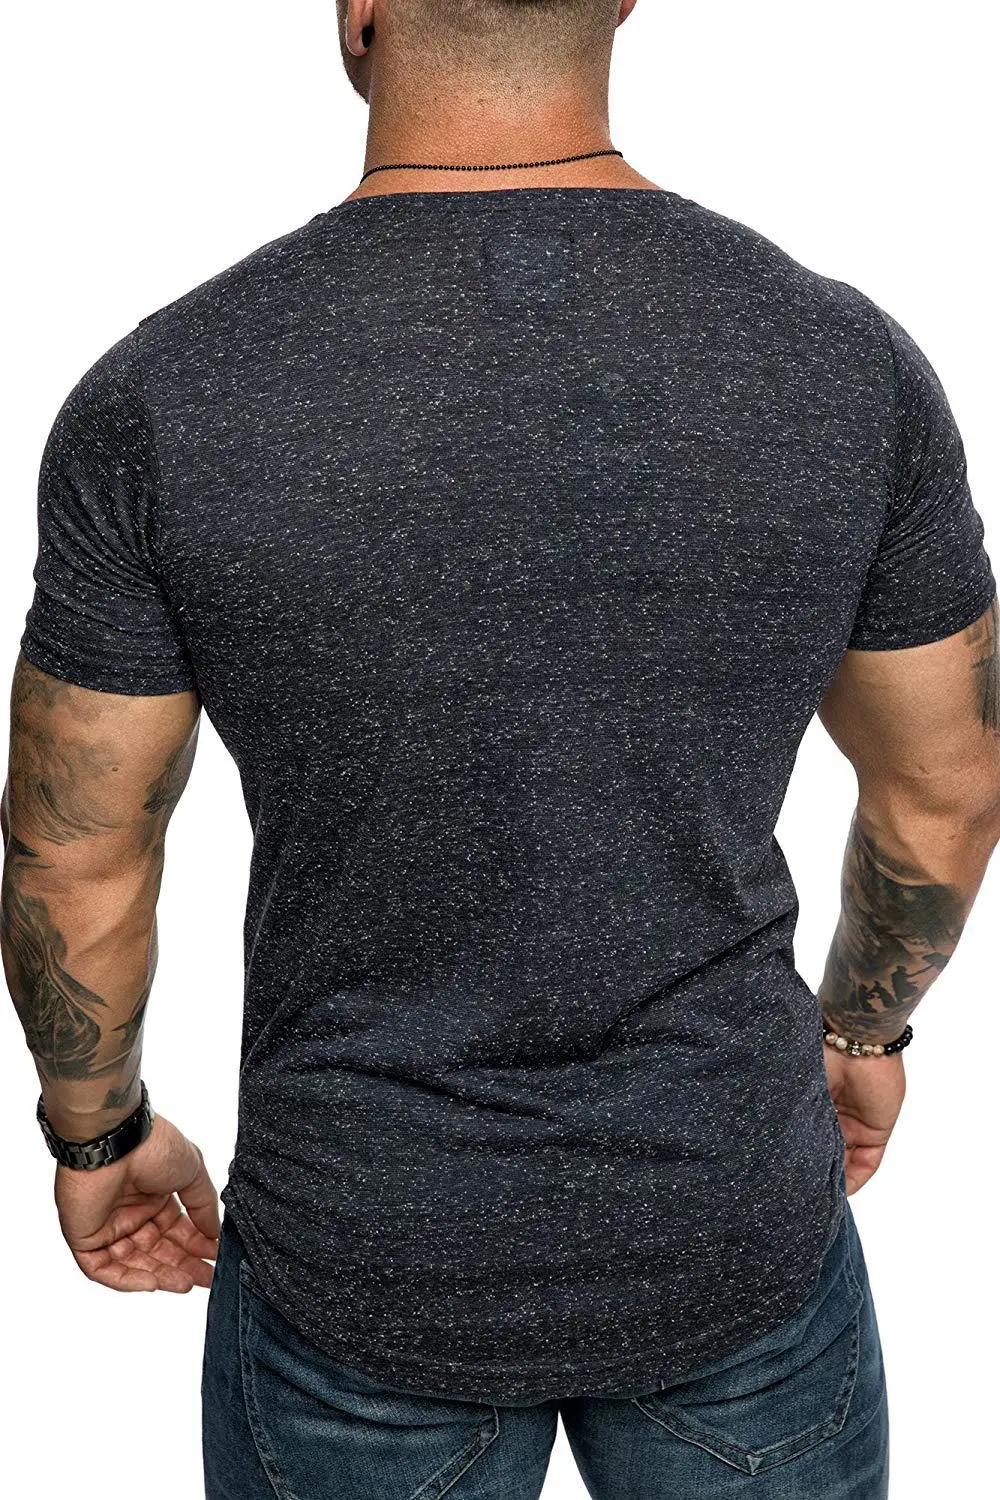 Men's Printed T-Shirt Snow DOT Sports Short Sleeve Clothes